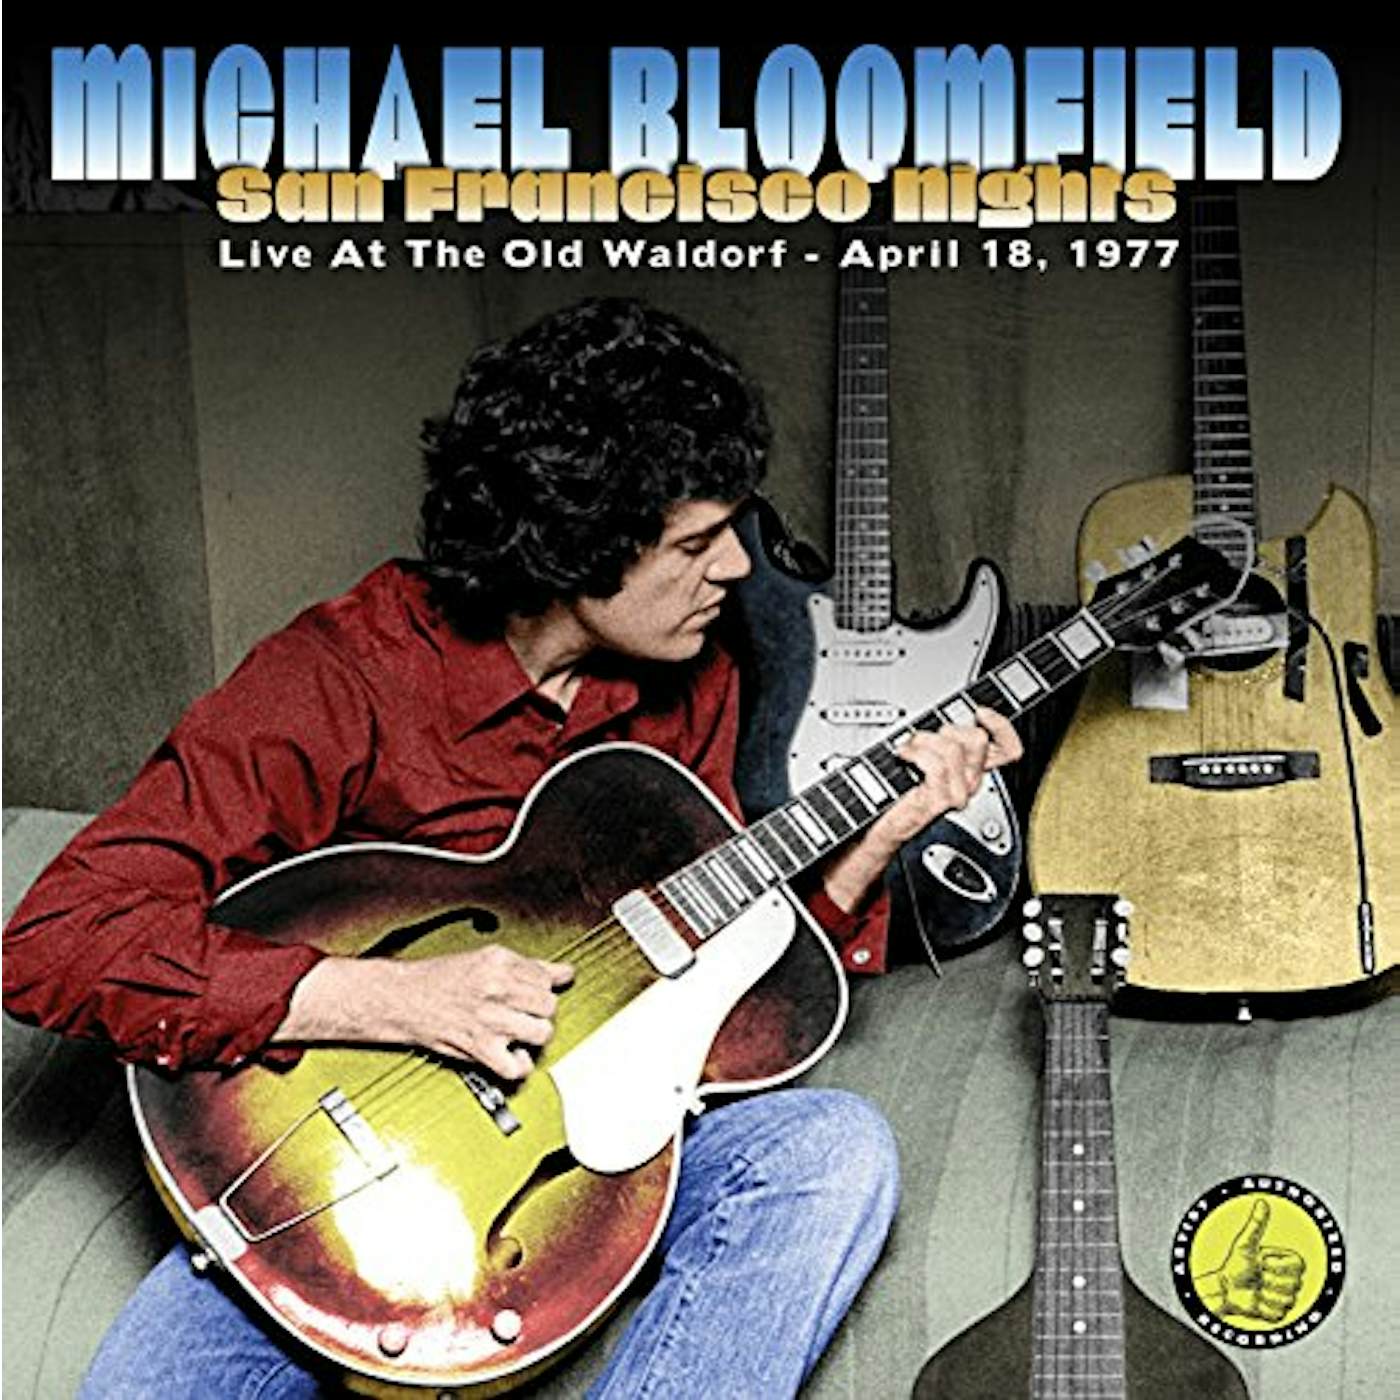 Mike Bloomfield SAN FRANCISCO NIGHTS CD